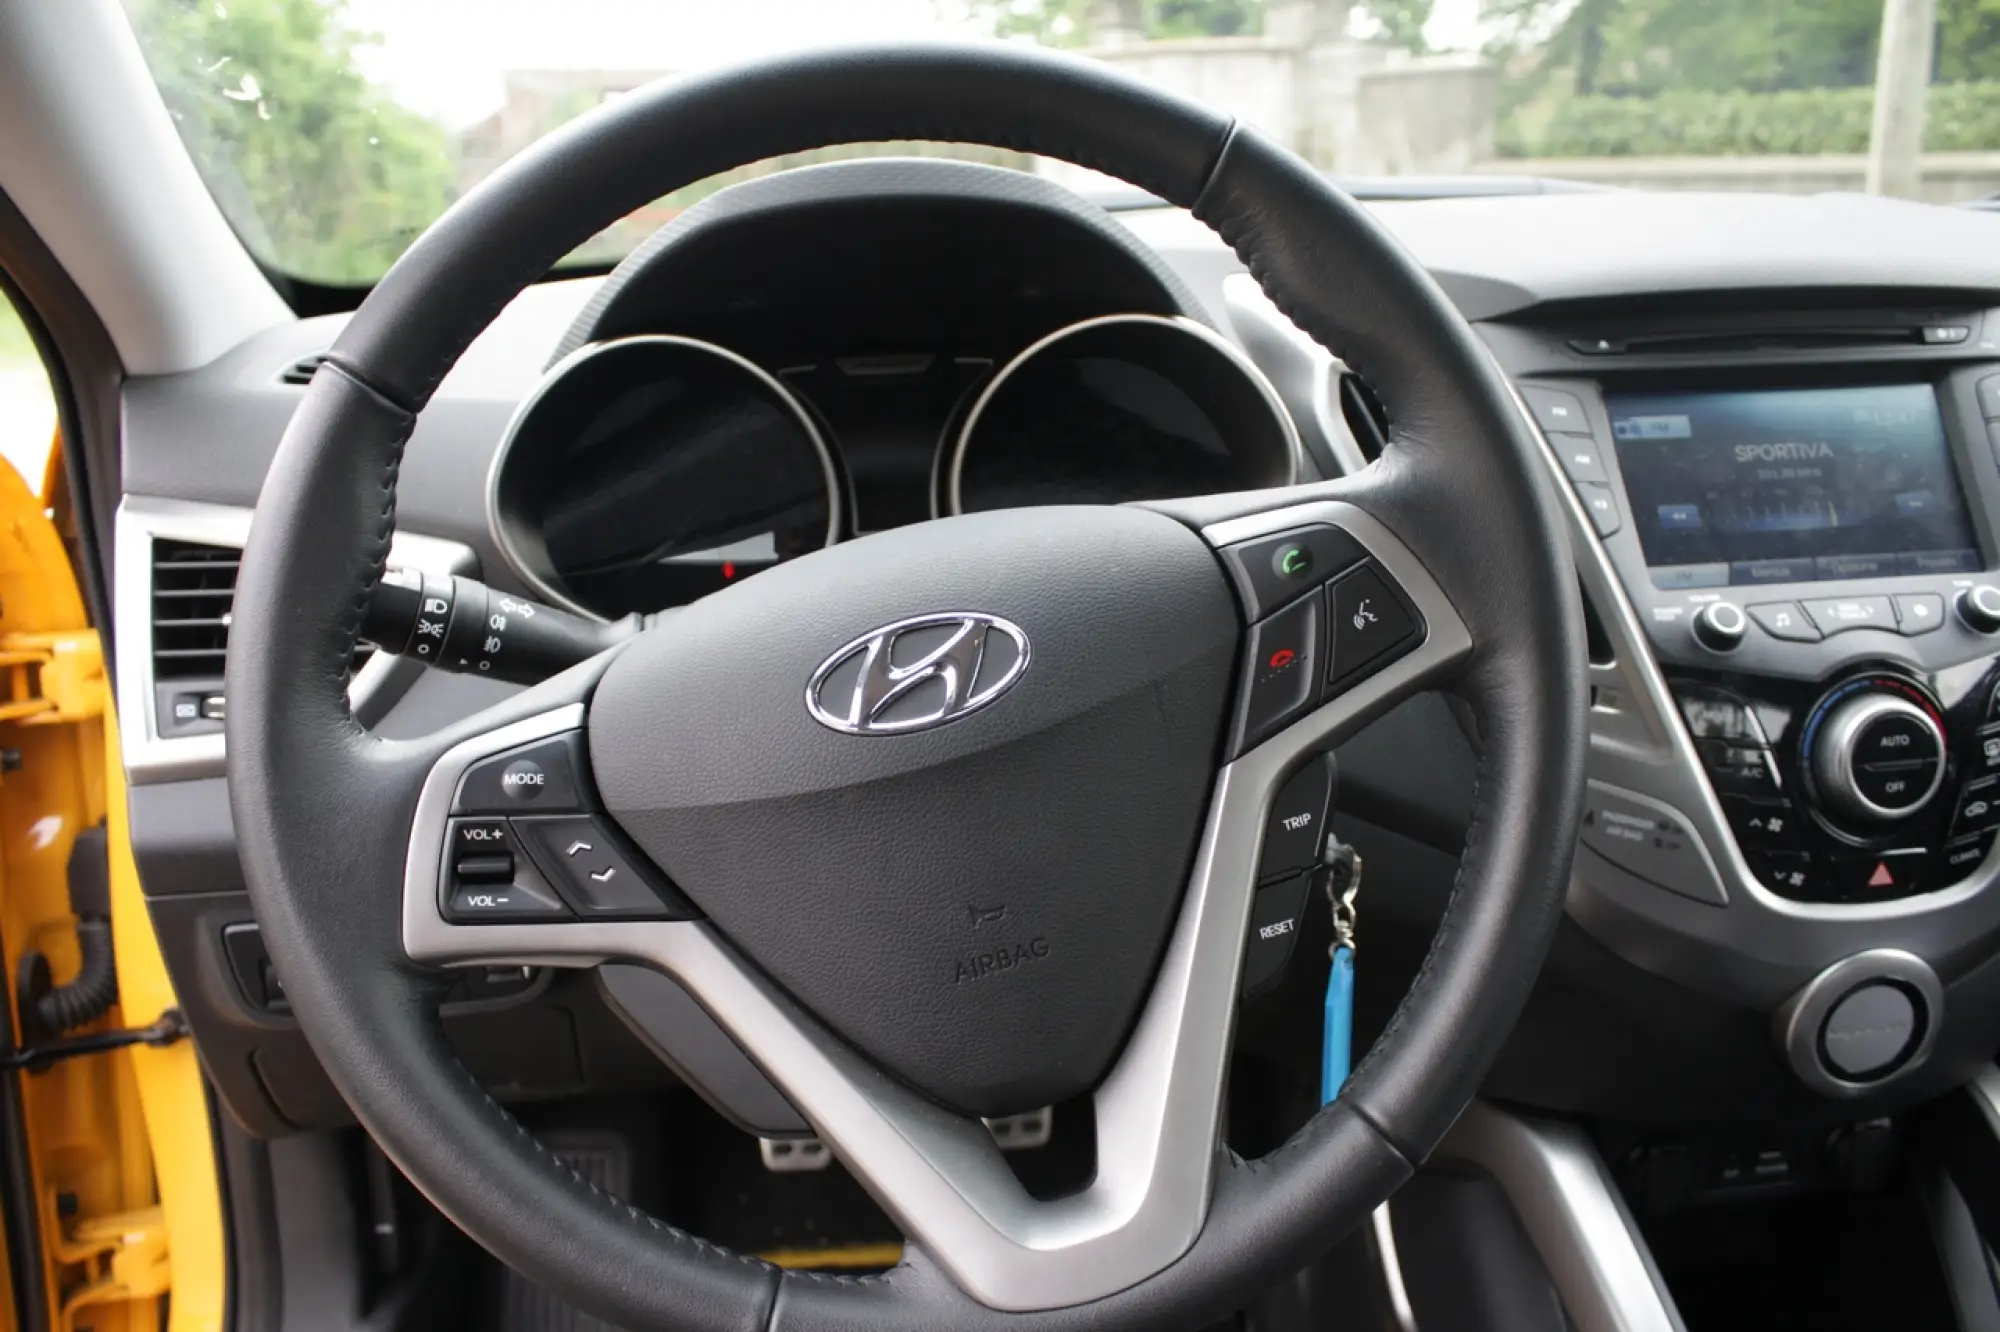 Hyundai Veloster - Test Drive 2012 - 112